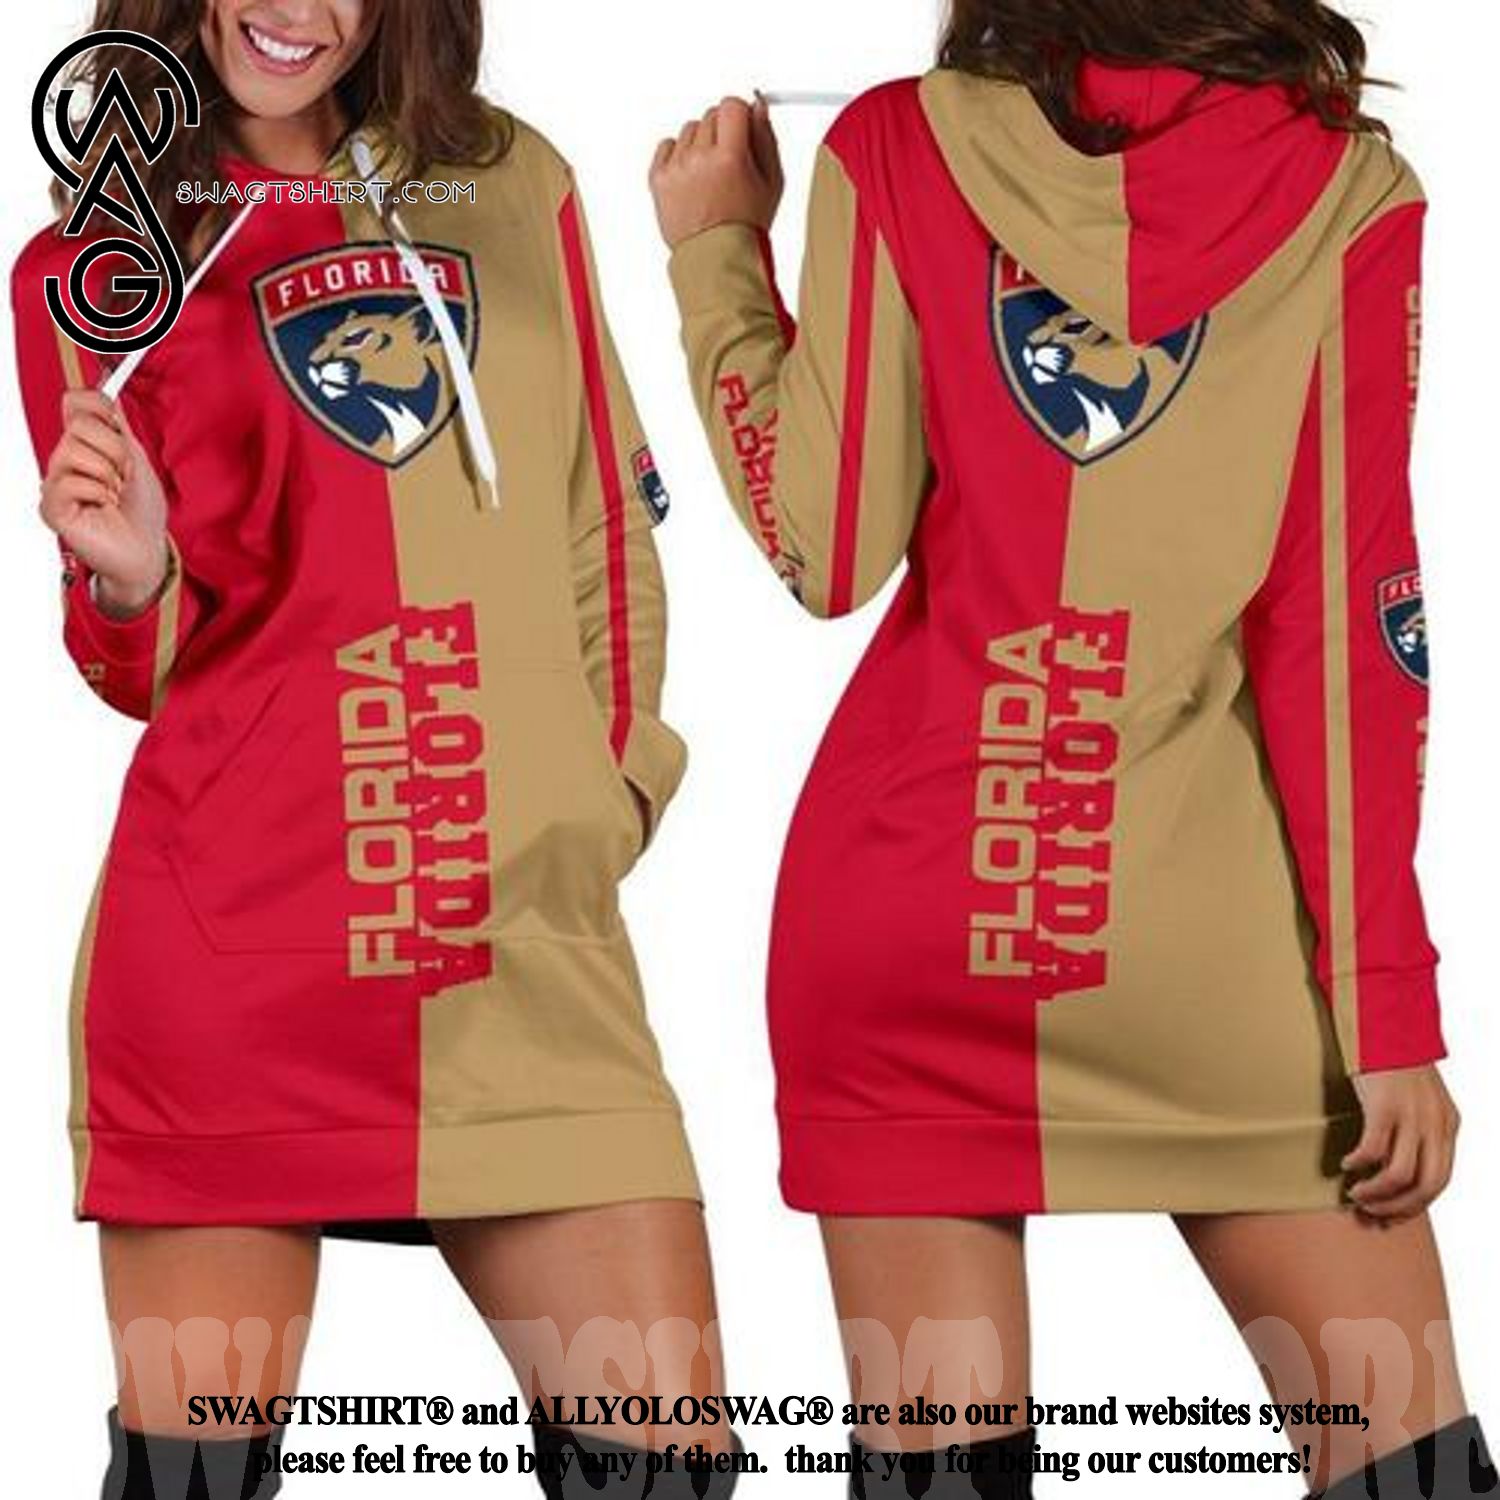 Florida Panthers New Fashion Hoodie Dress